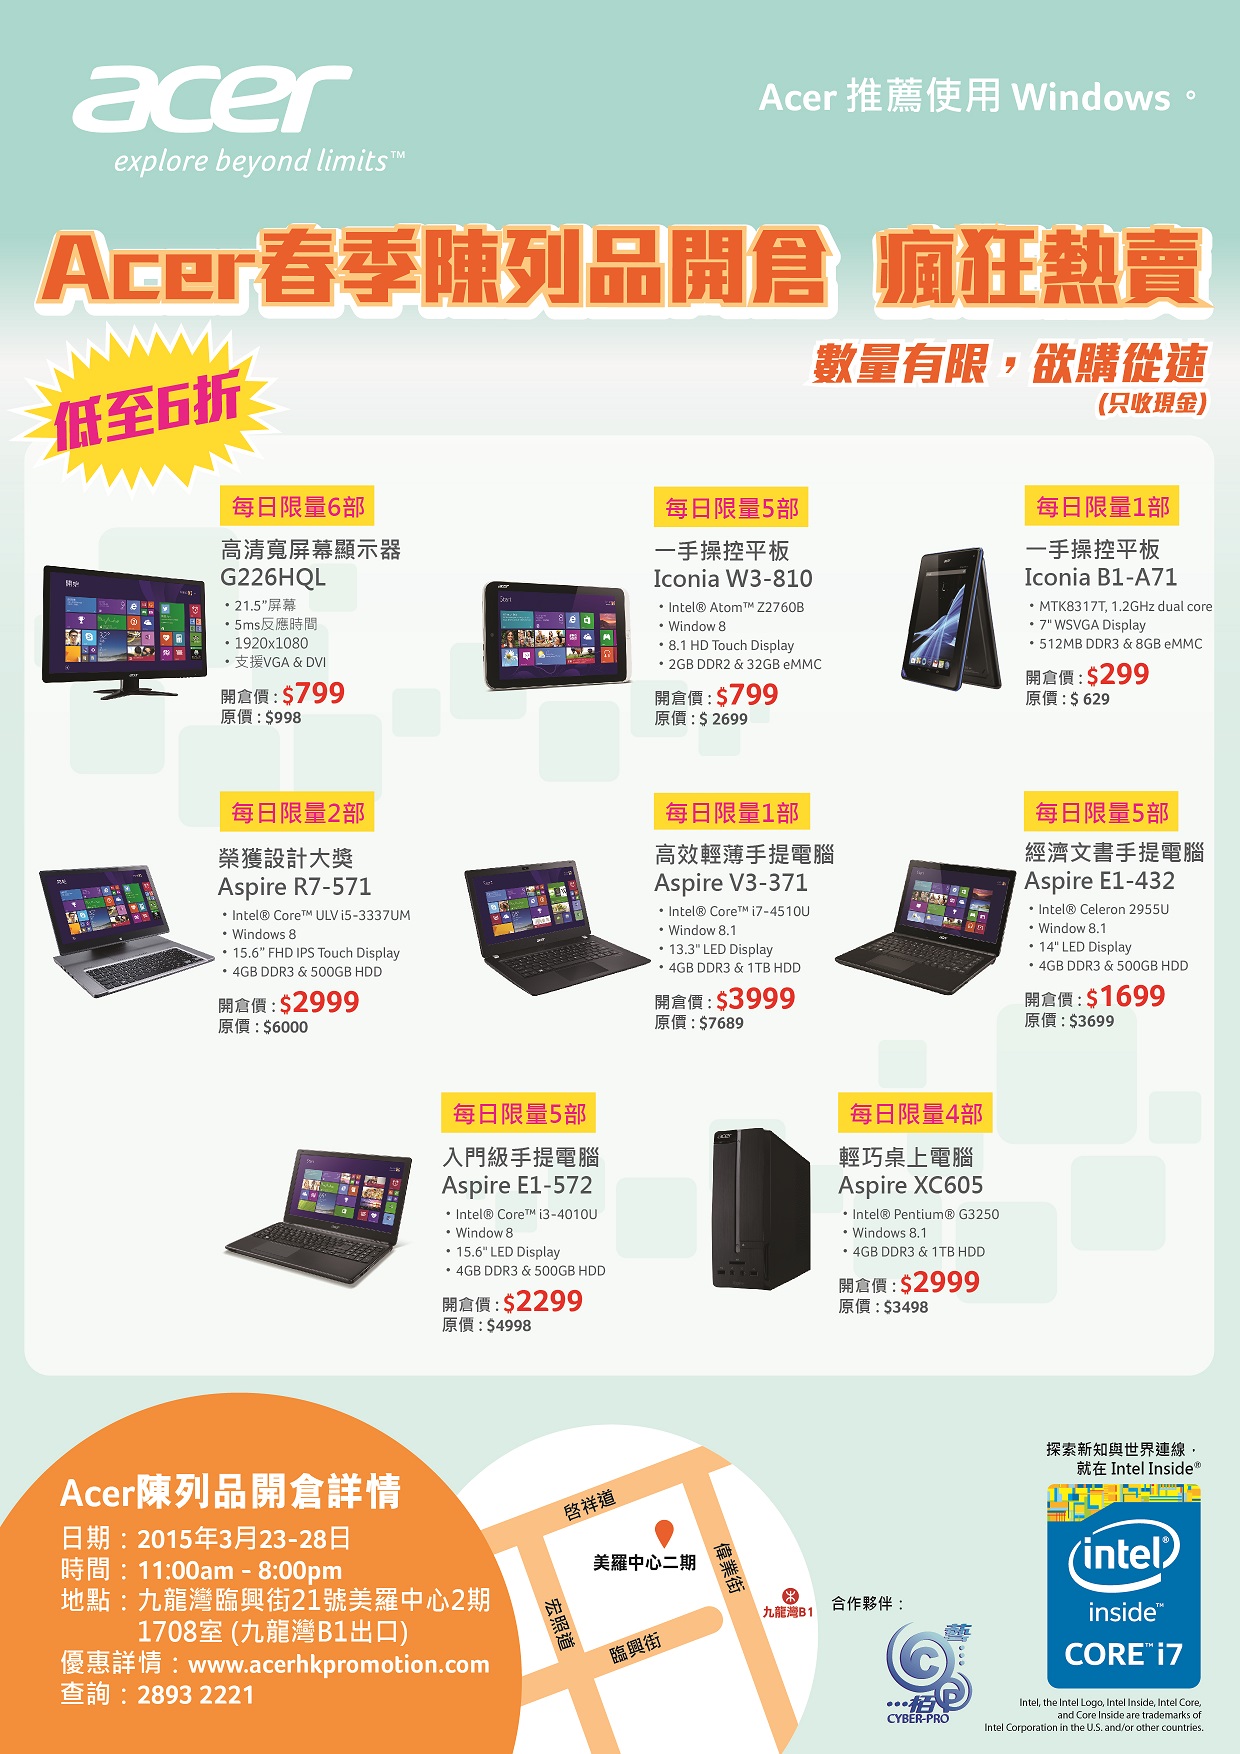 Acer 2015 Promotion